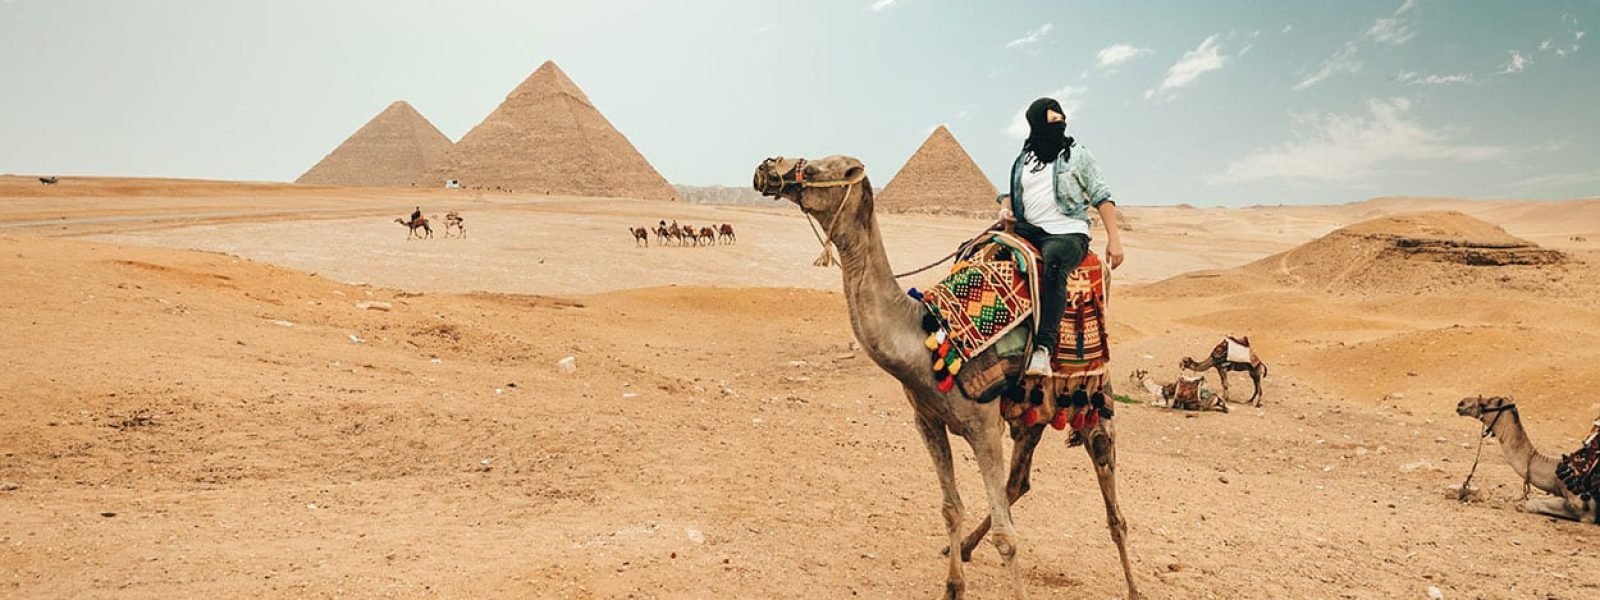 reis naar egypte